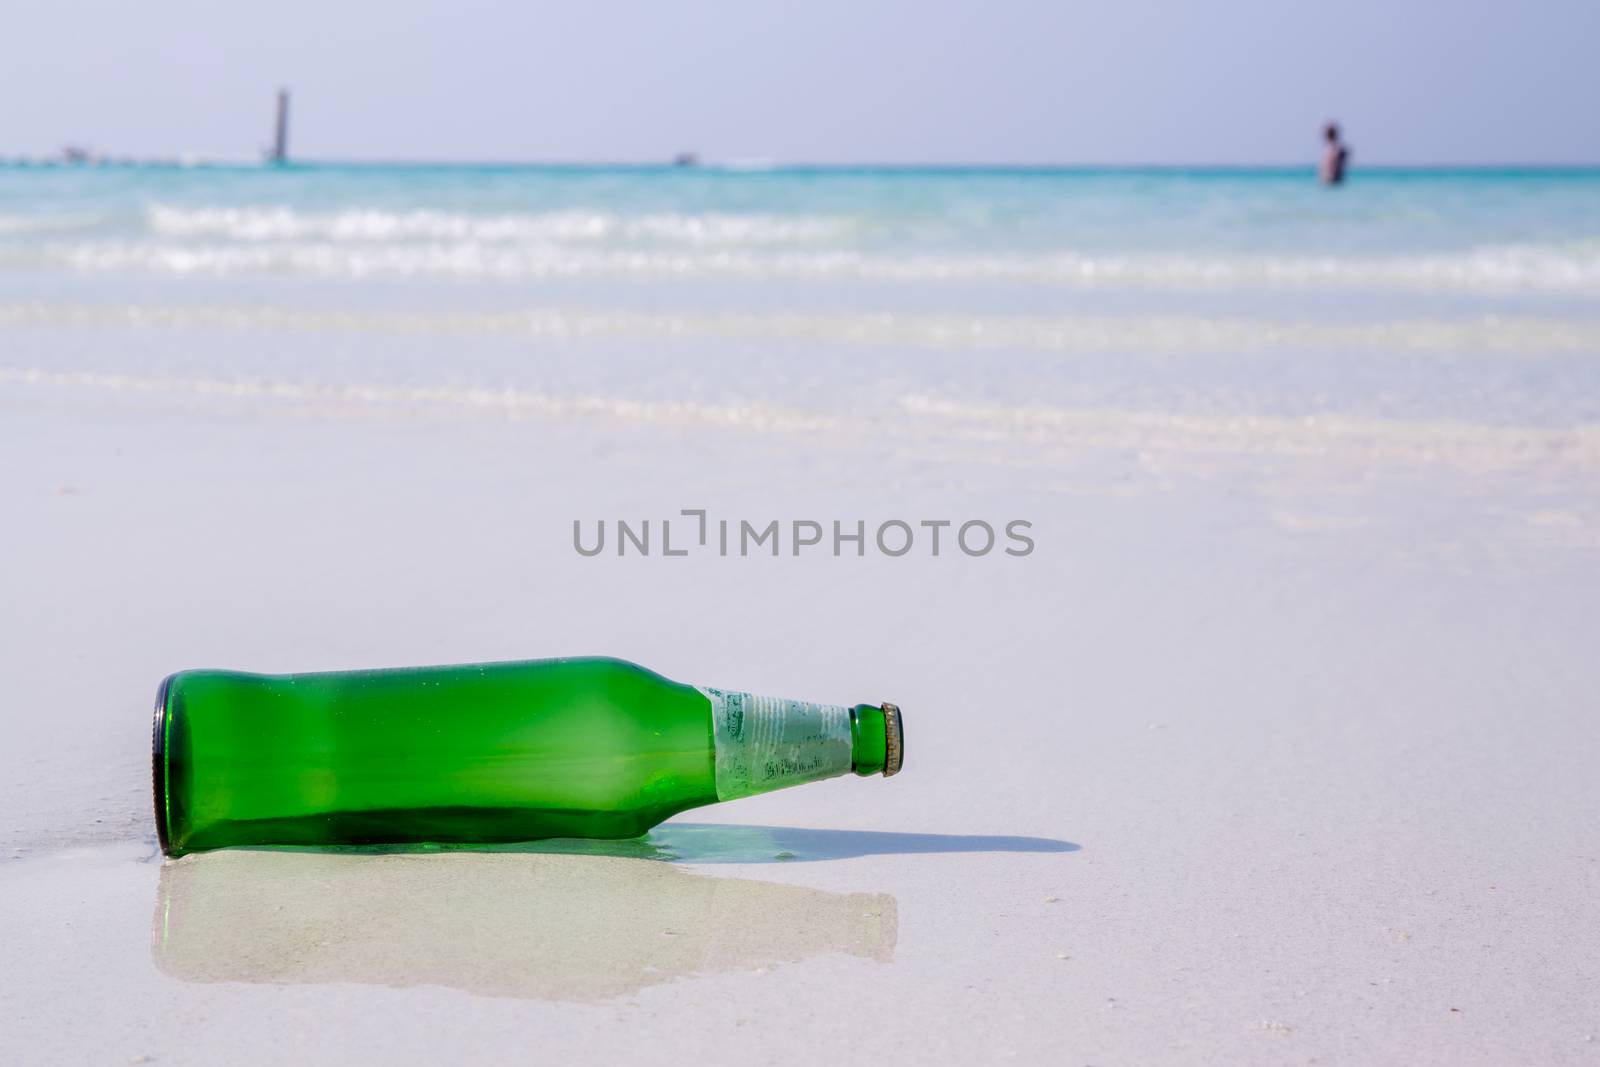 Beer bottle on a sandy beach.